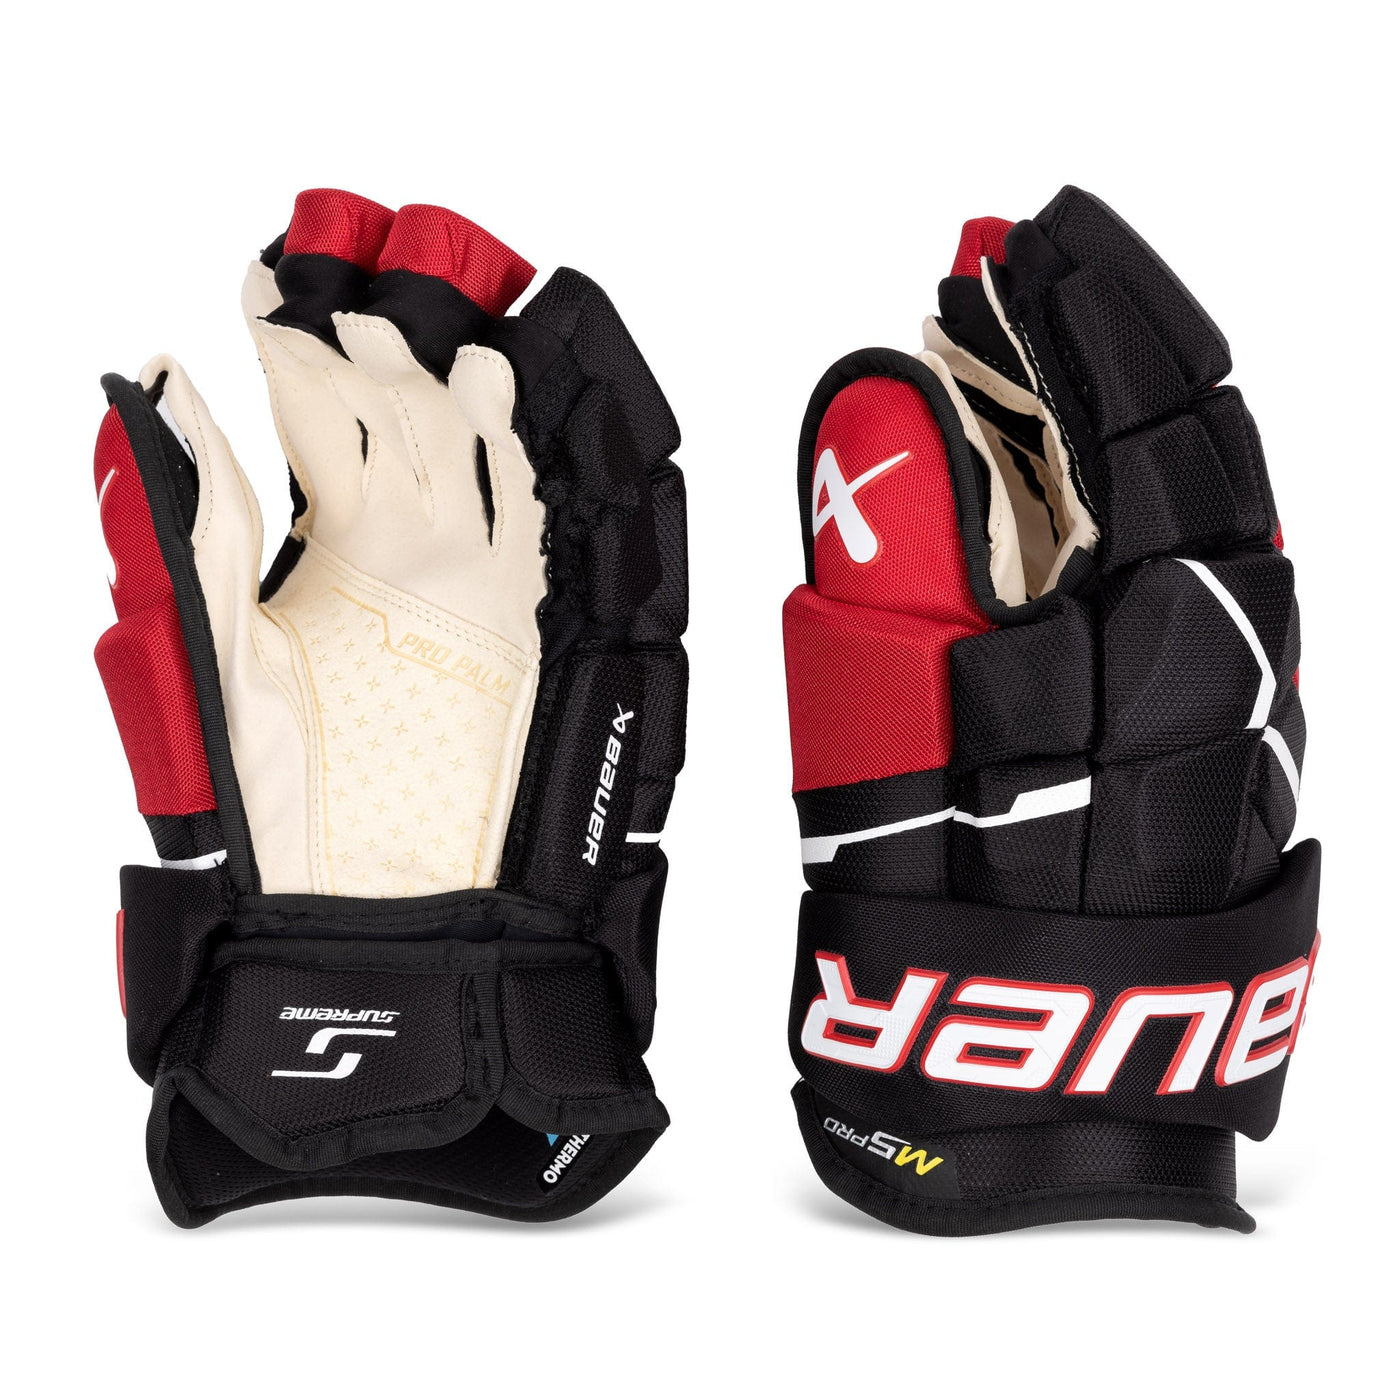 Bauer Supreme M5 Pro Senior Hockey Gloves - The Hockey Shop Source For Sports